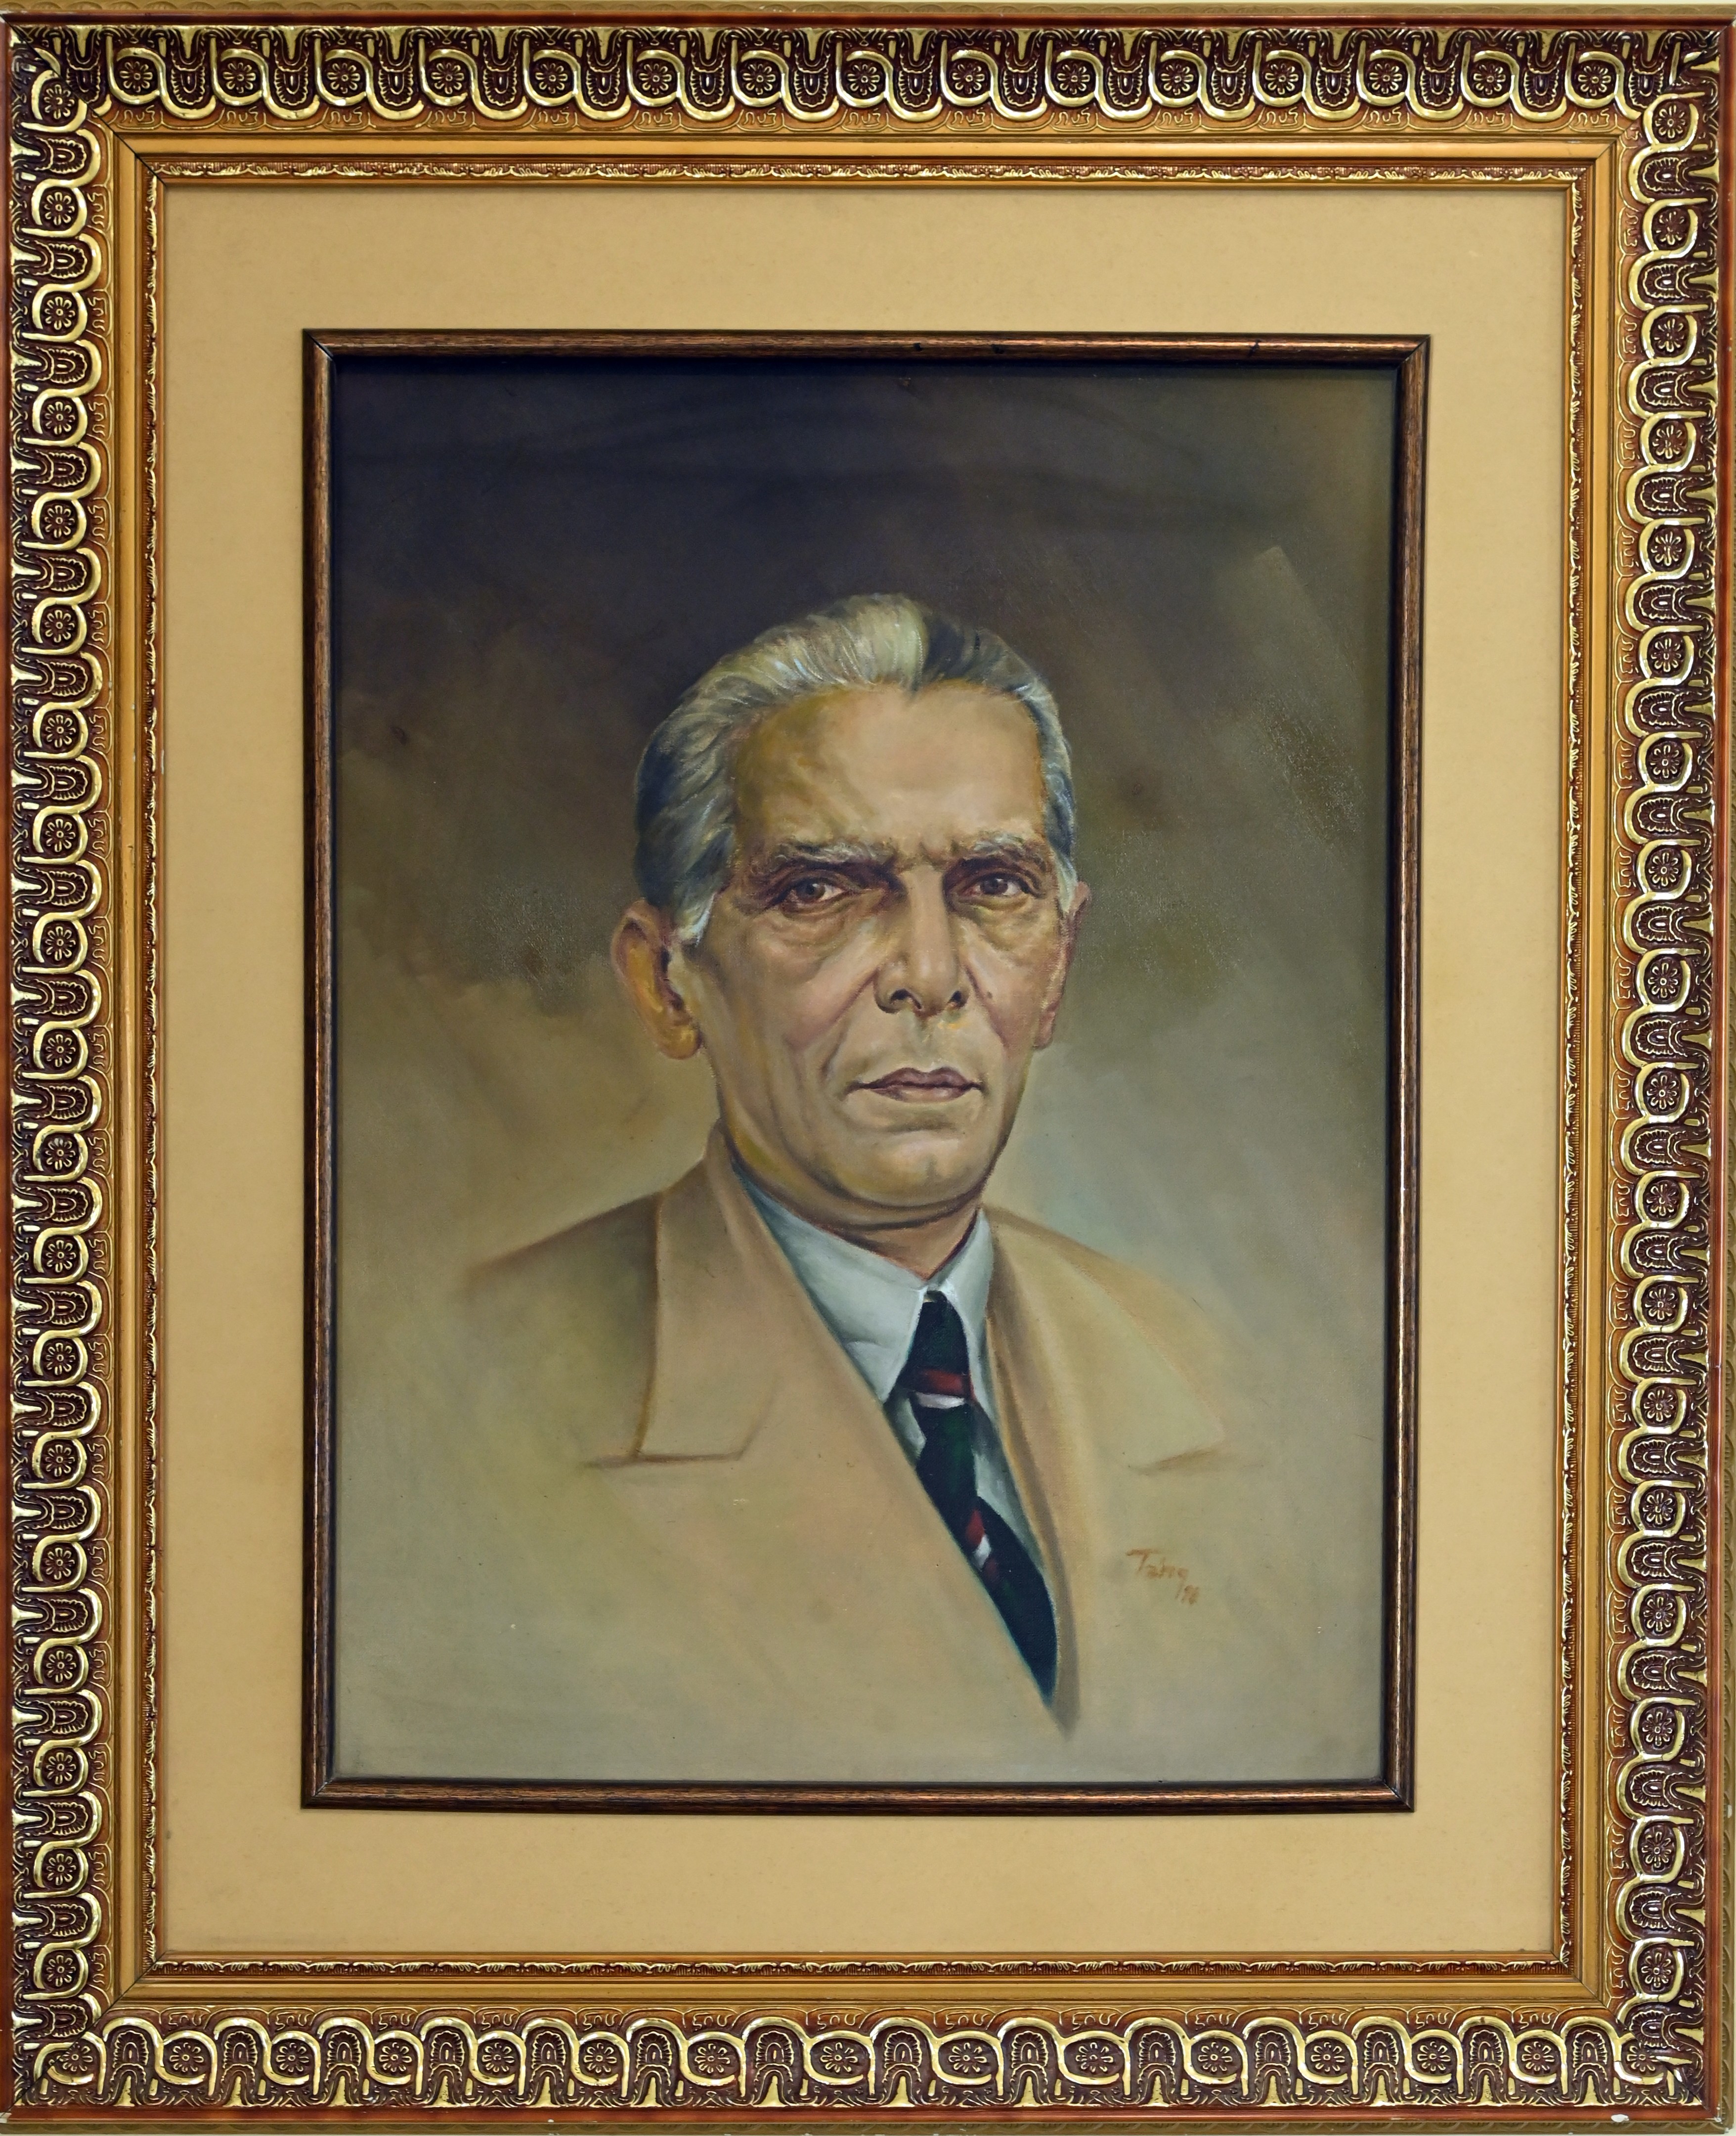 The painting of Quaid I Azam Muhammad Ali Jinnah, the founder of Pakistan